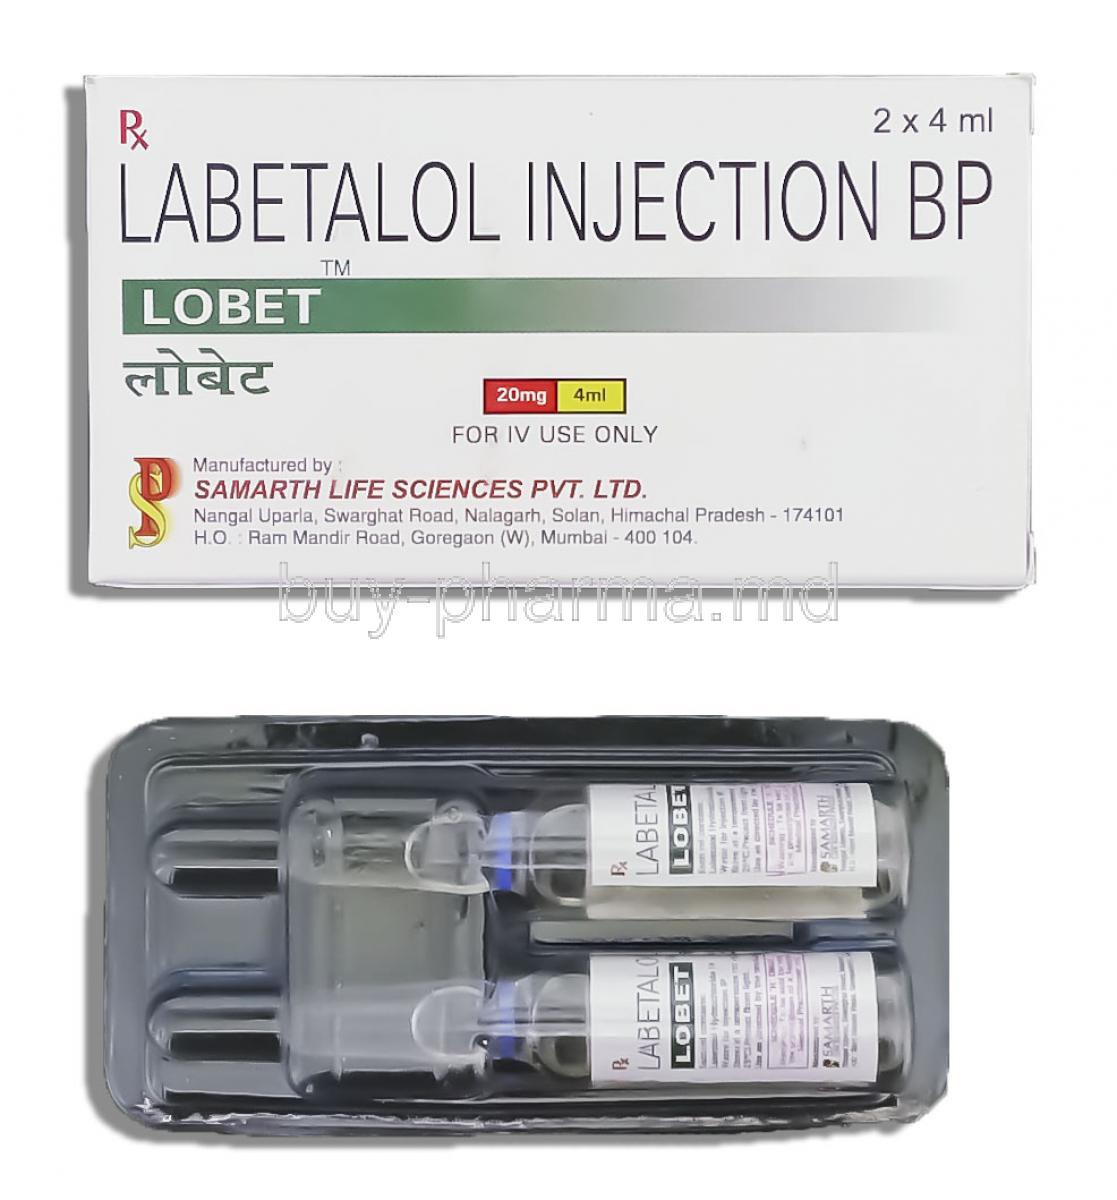 Labetalol injection 10mg/20mg, 5mg